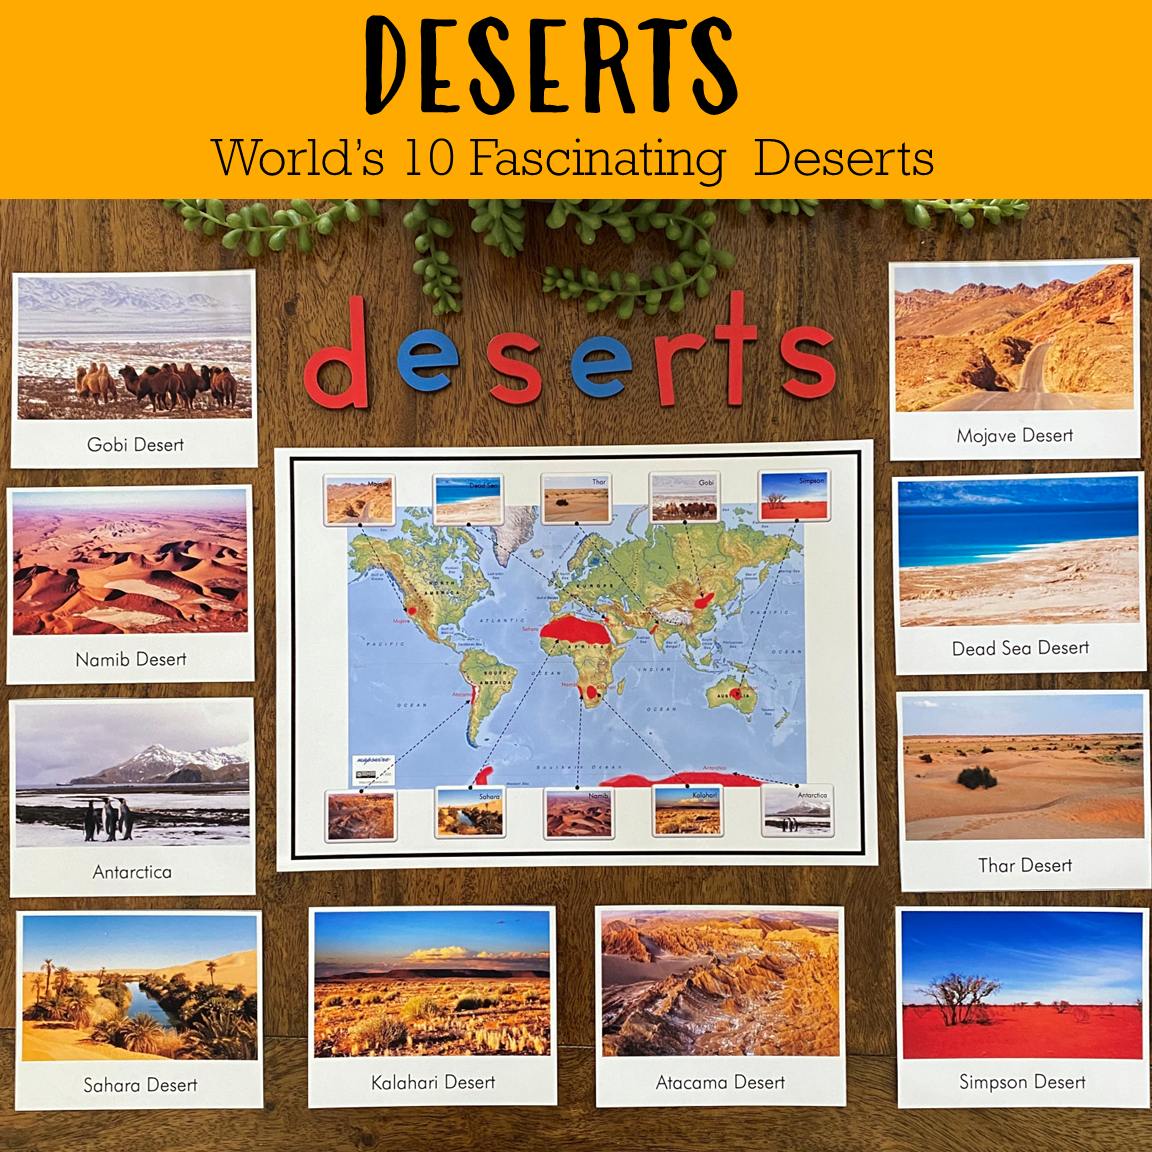 Deserts - World's 10 Fascinating Deserts